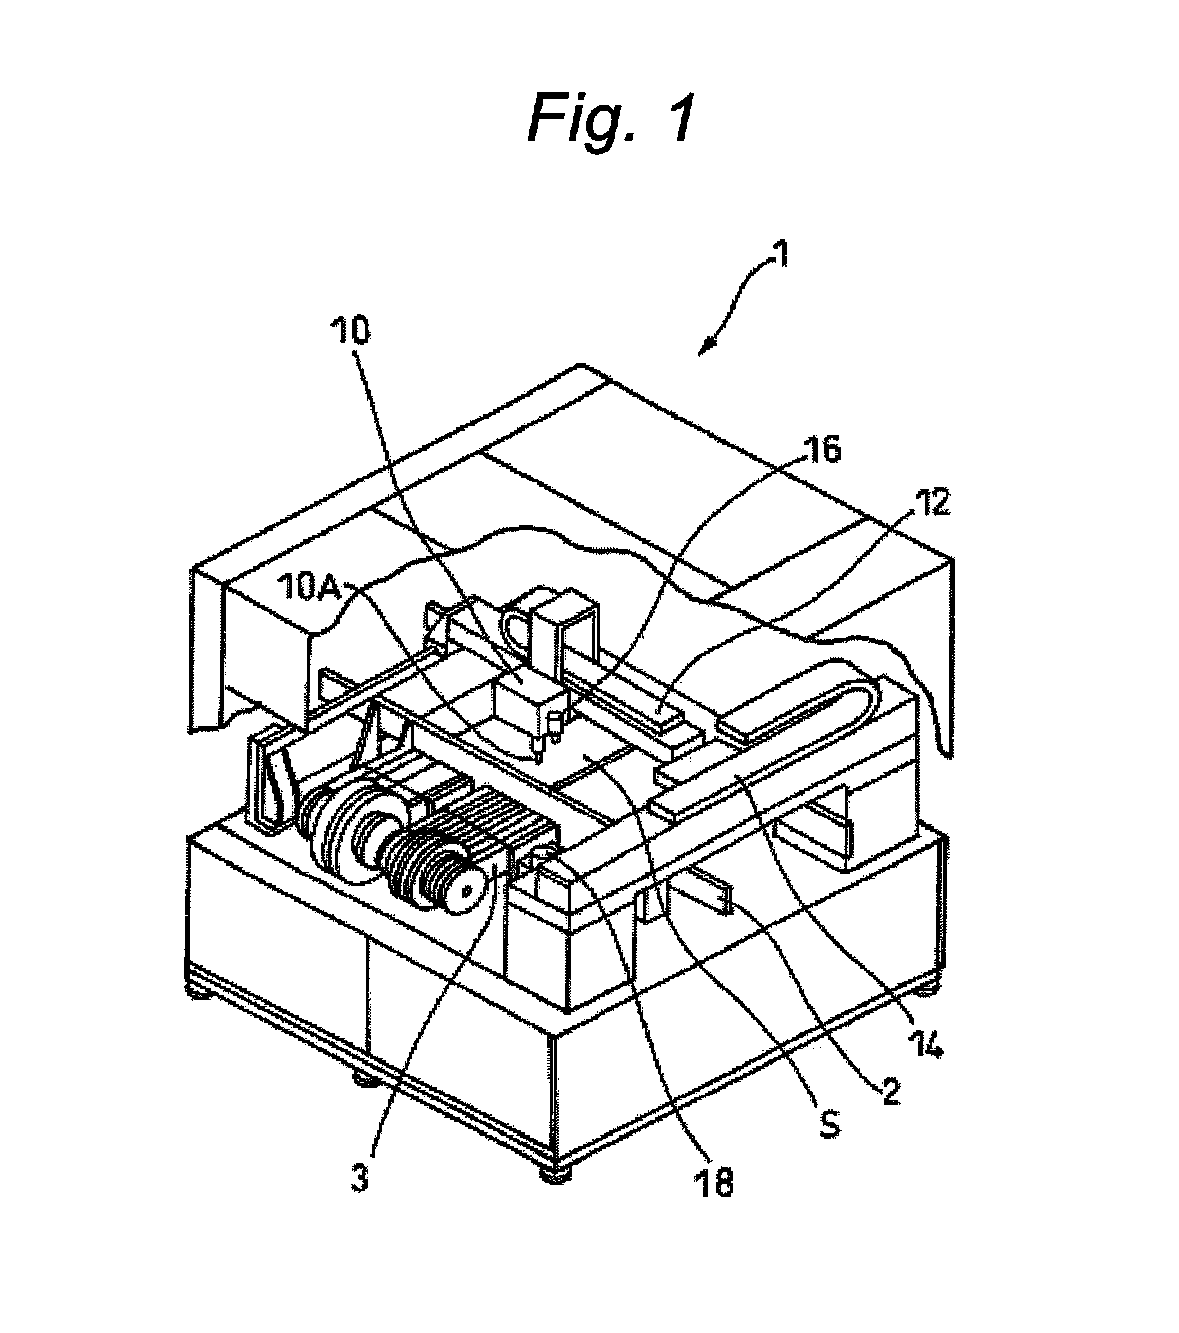 Surface mounting apparatus